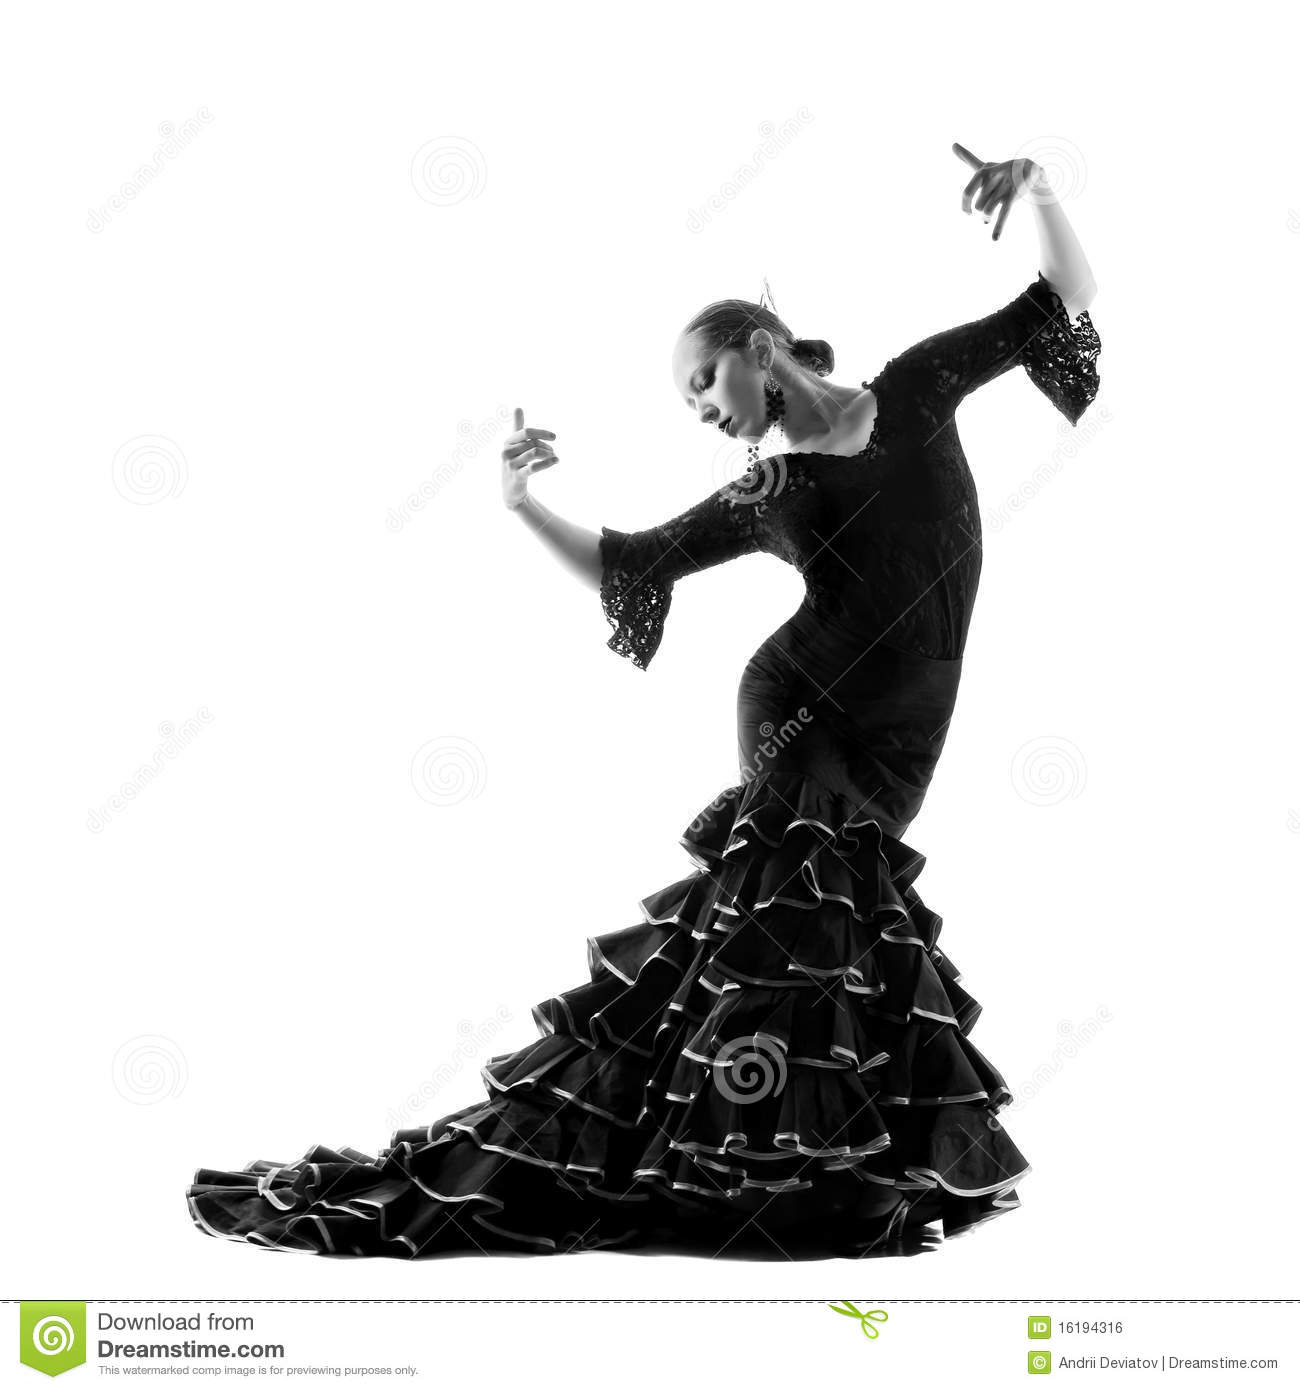 Flamenco Dancer Silhouette Royalty Free Stock Image   Image  16194316